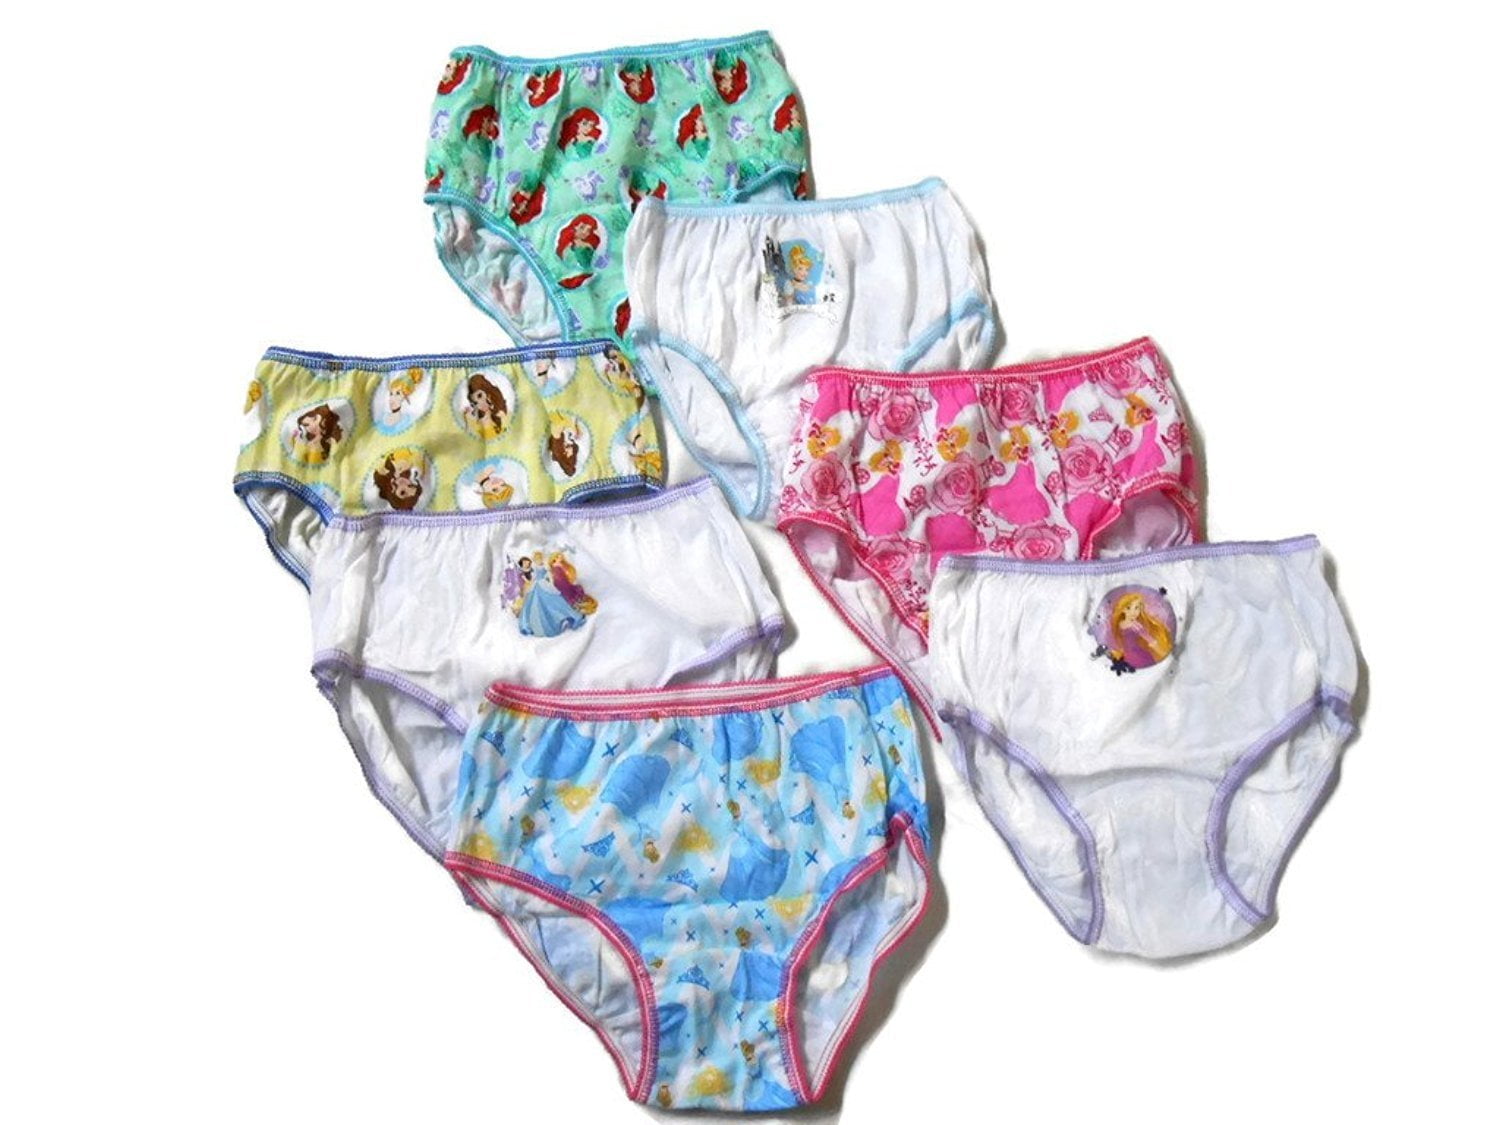 Vintage Nylon Brief Panties For Little Girls 3 pc pack Size 4 Asstd colors